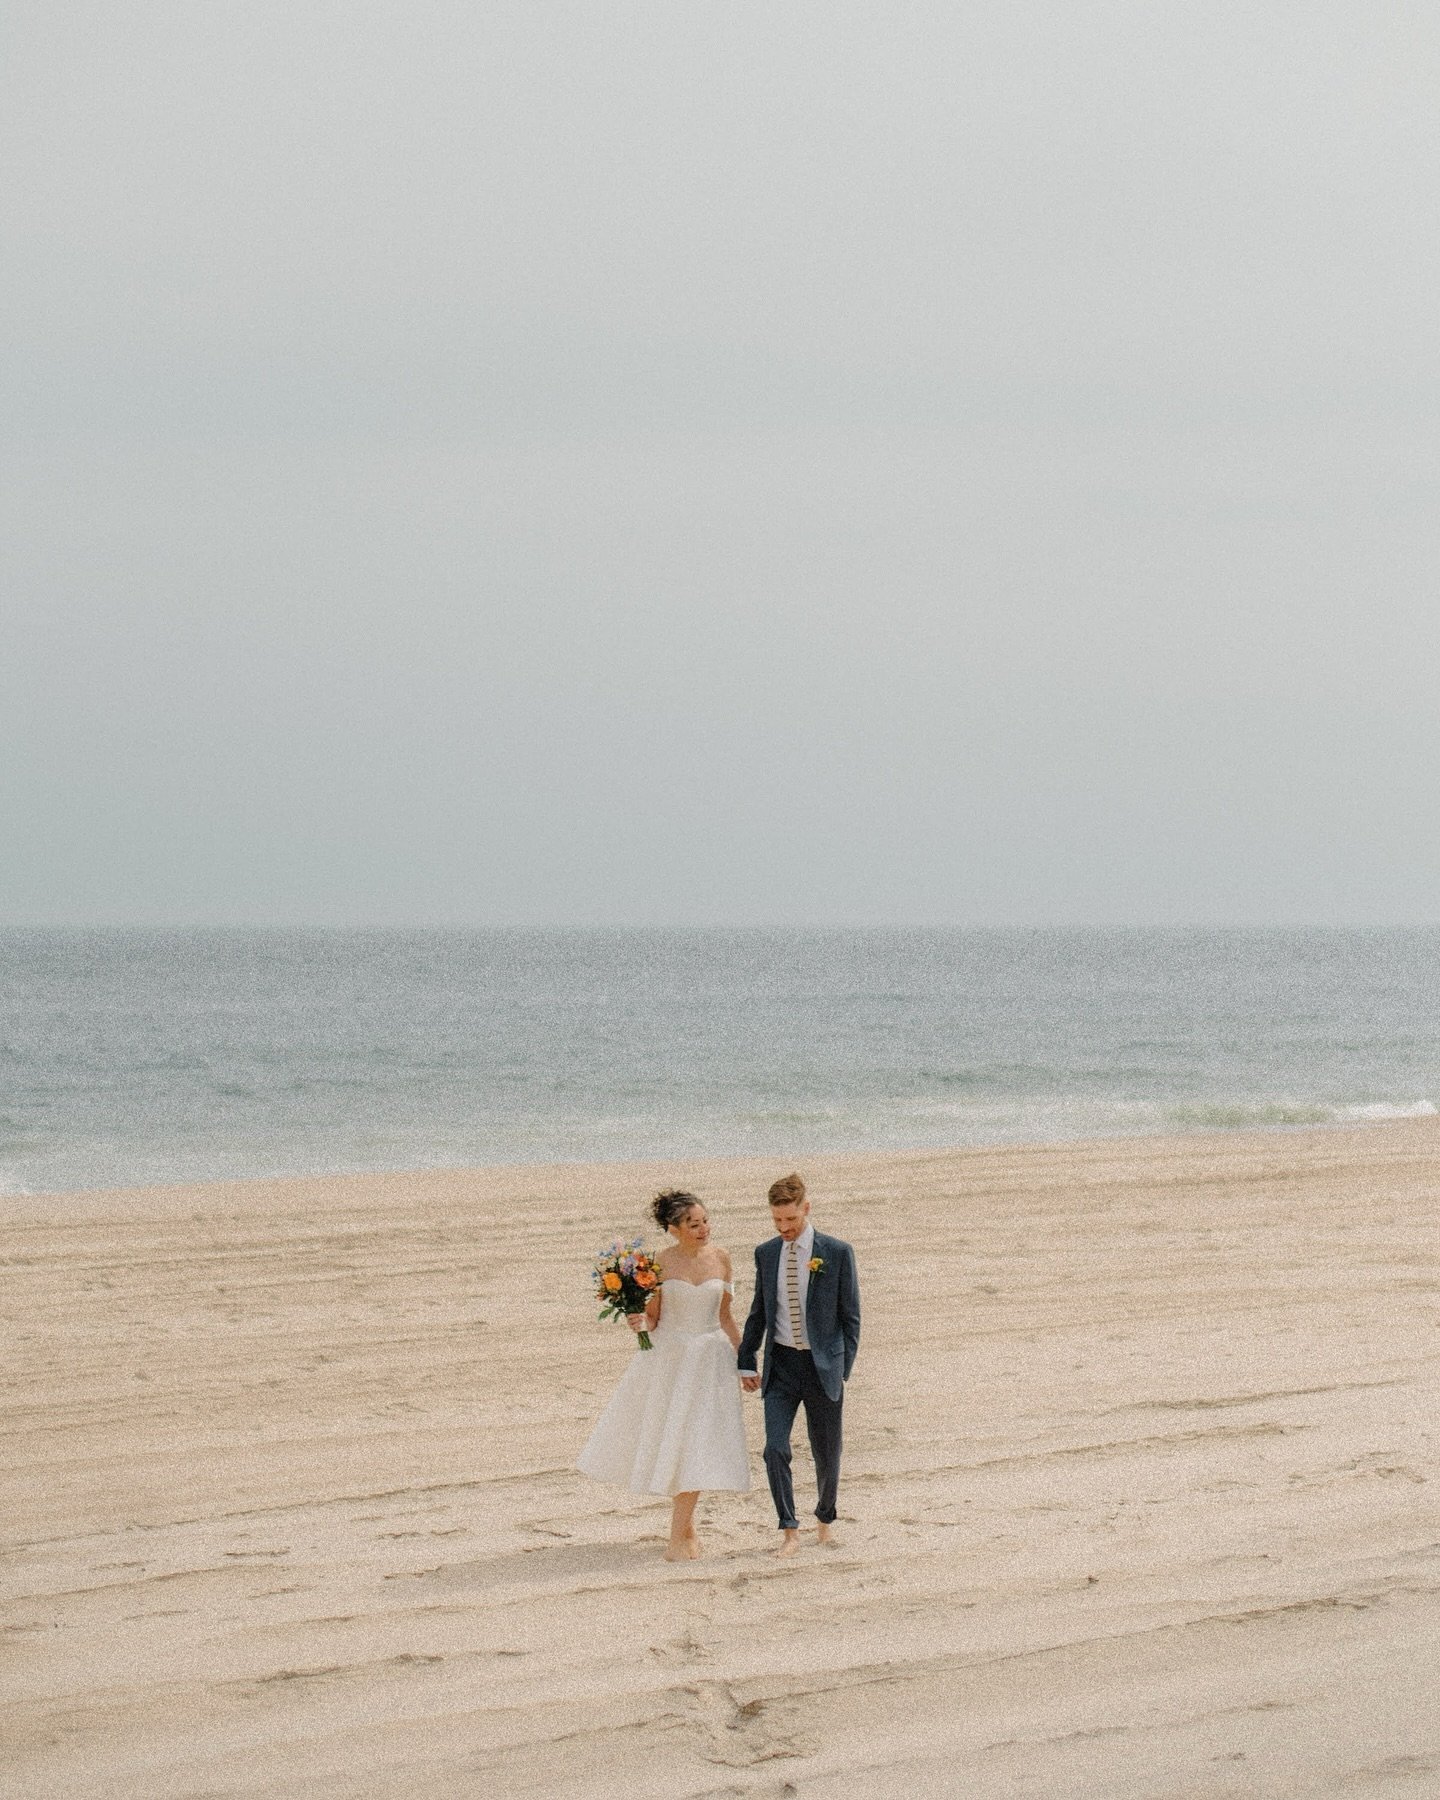 &ldquo;shell beach&rdquo;
#newyorkweddingphotographer #beachwedding #hamptonswedding #couplepose #elopementideas #brideandgroomphotos